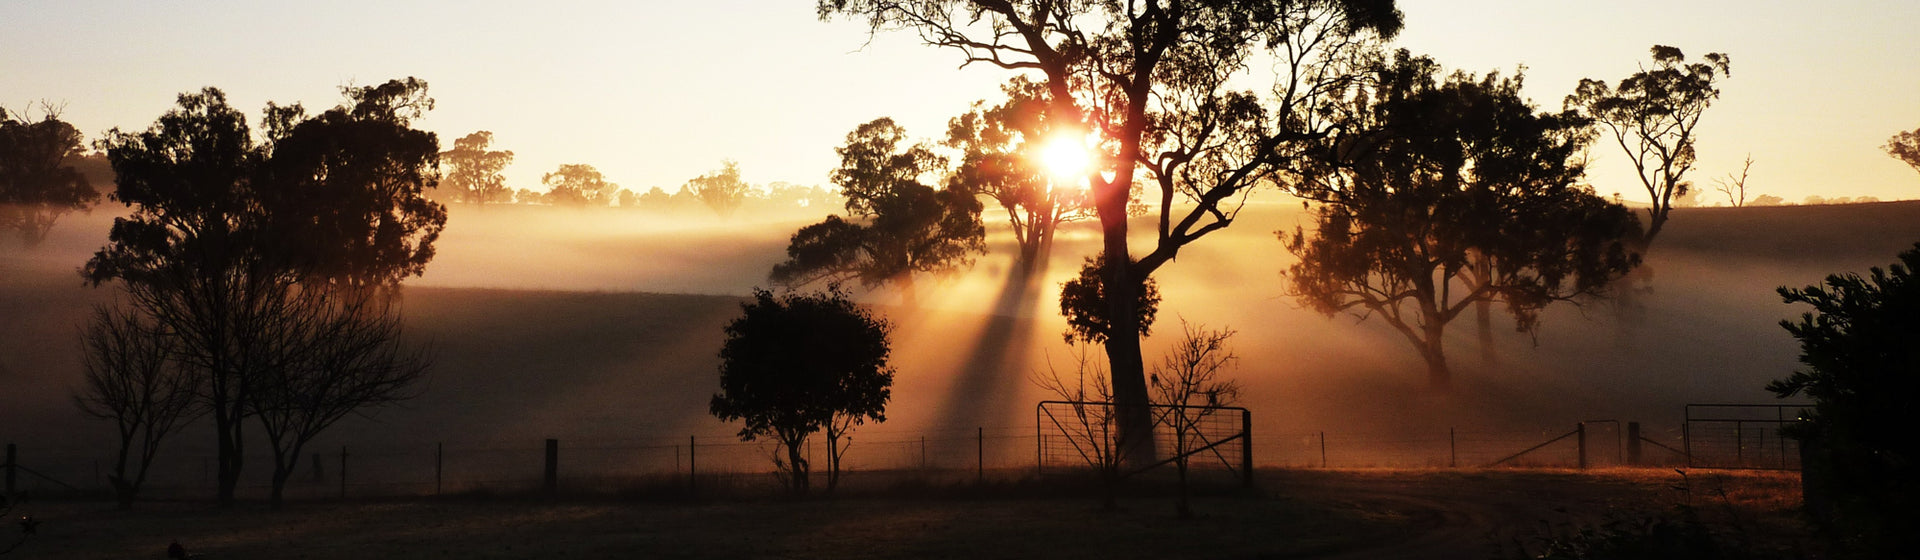 Early morning sun shines through the fog over Australian farmland.